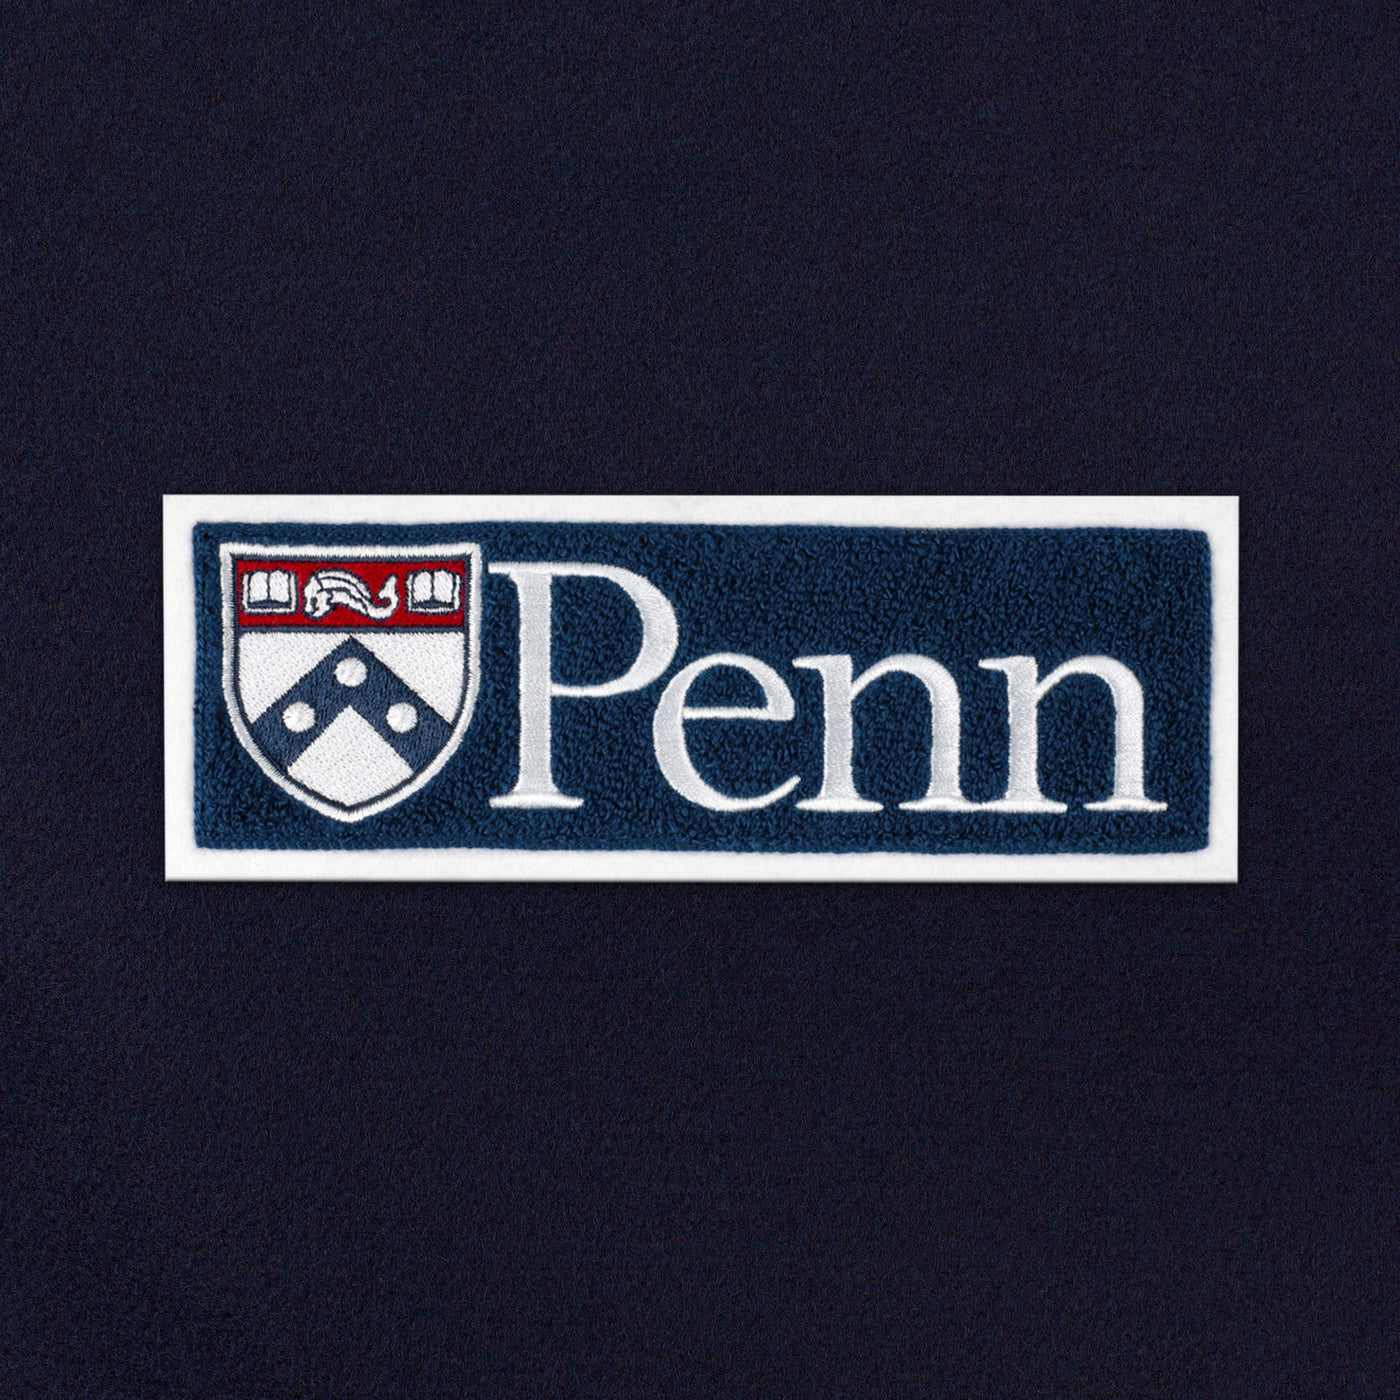 Penn Quakers "Shield" Weekender Duffle Bag